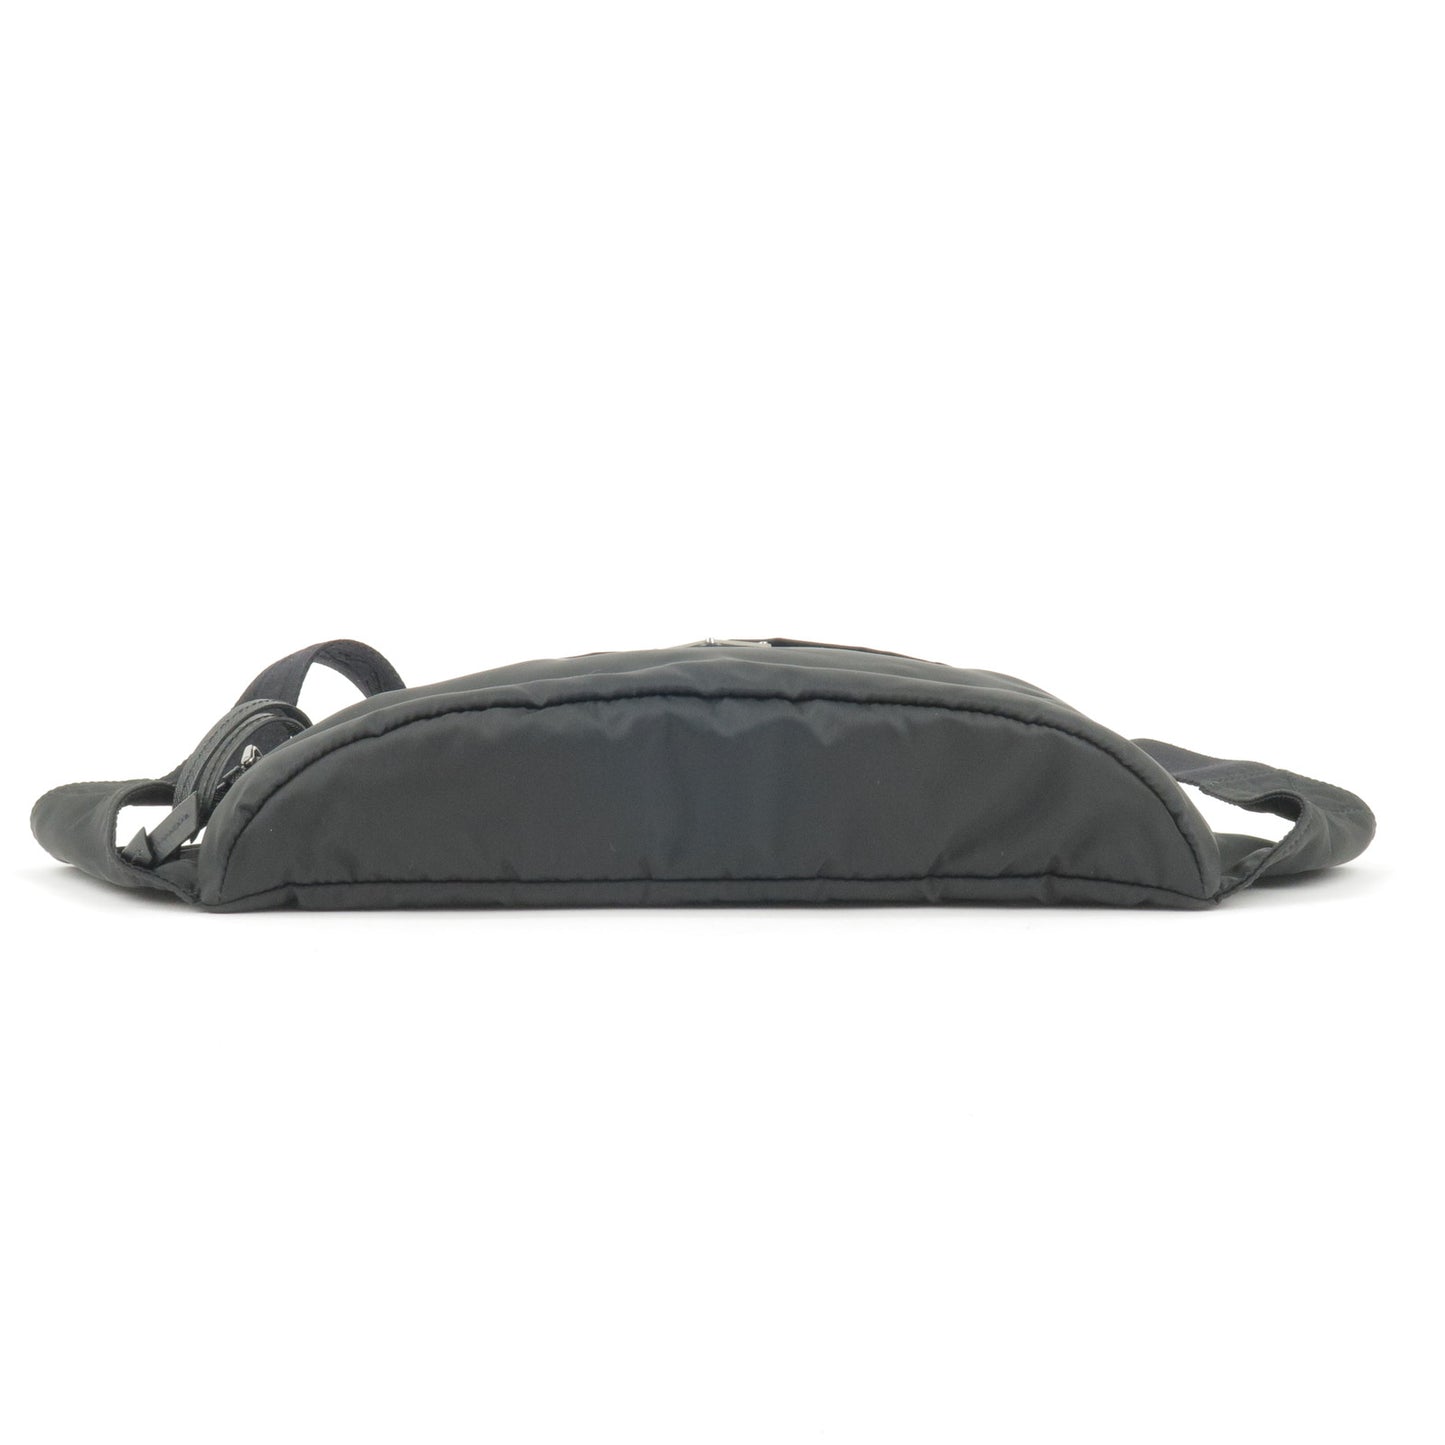 PRADA Logo Nylon Leather Waist Pouch Body Bag NERO Black